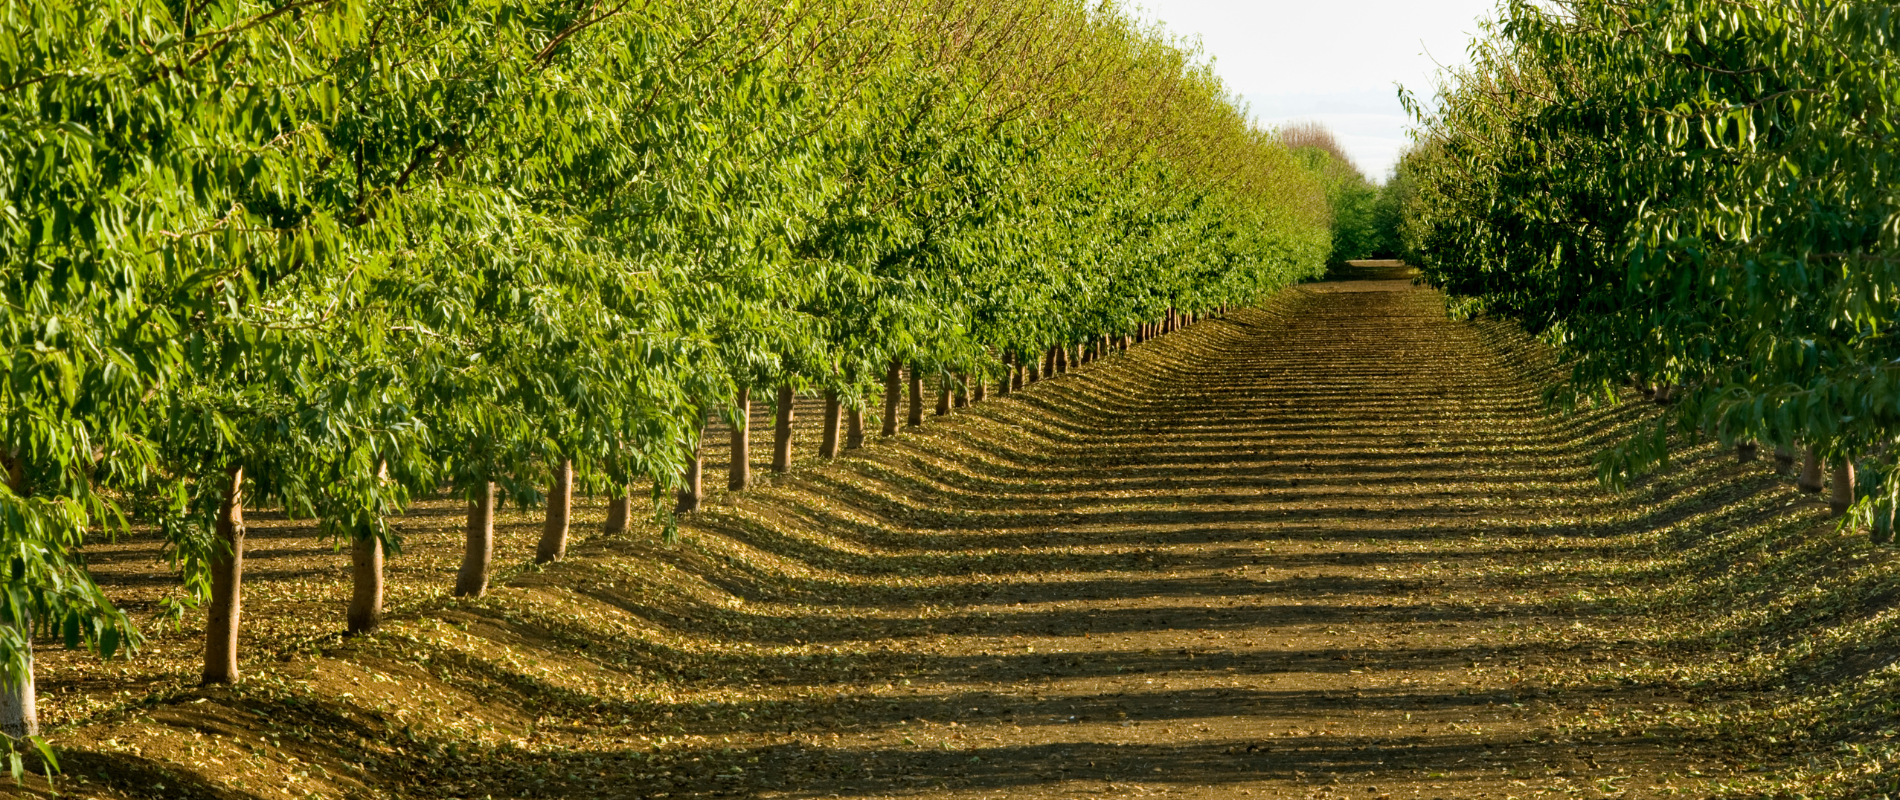 Almond tree farm in Central Valley, California